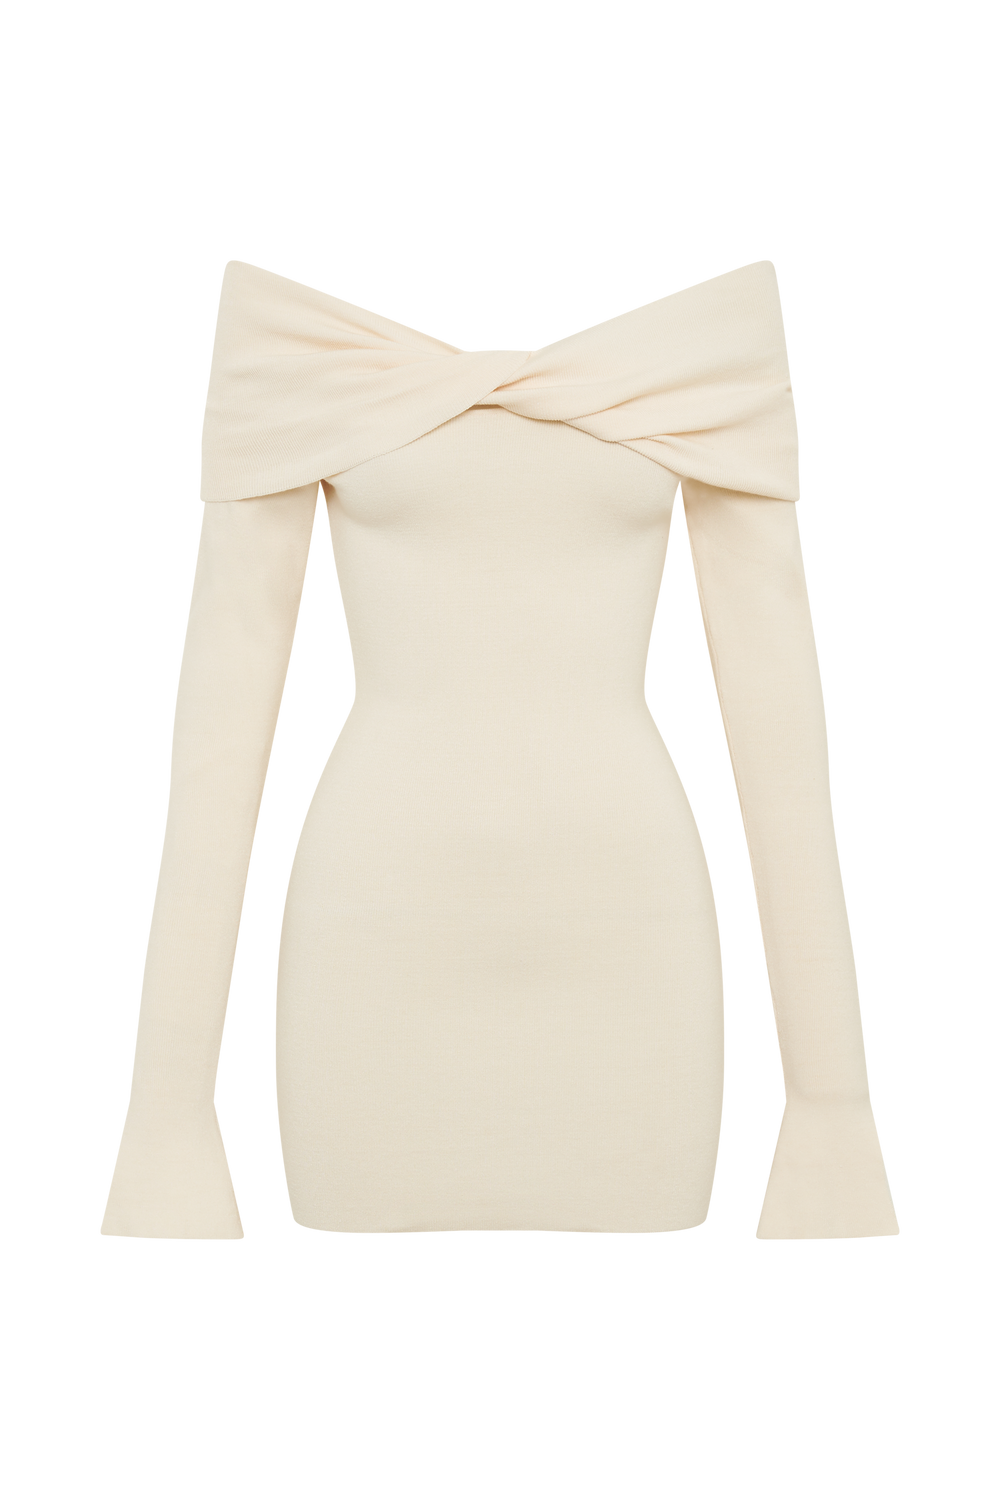 Clover Off Shoulder Knit Mini Dress - Cream